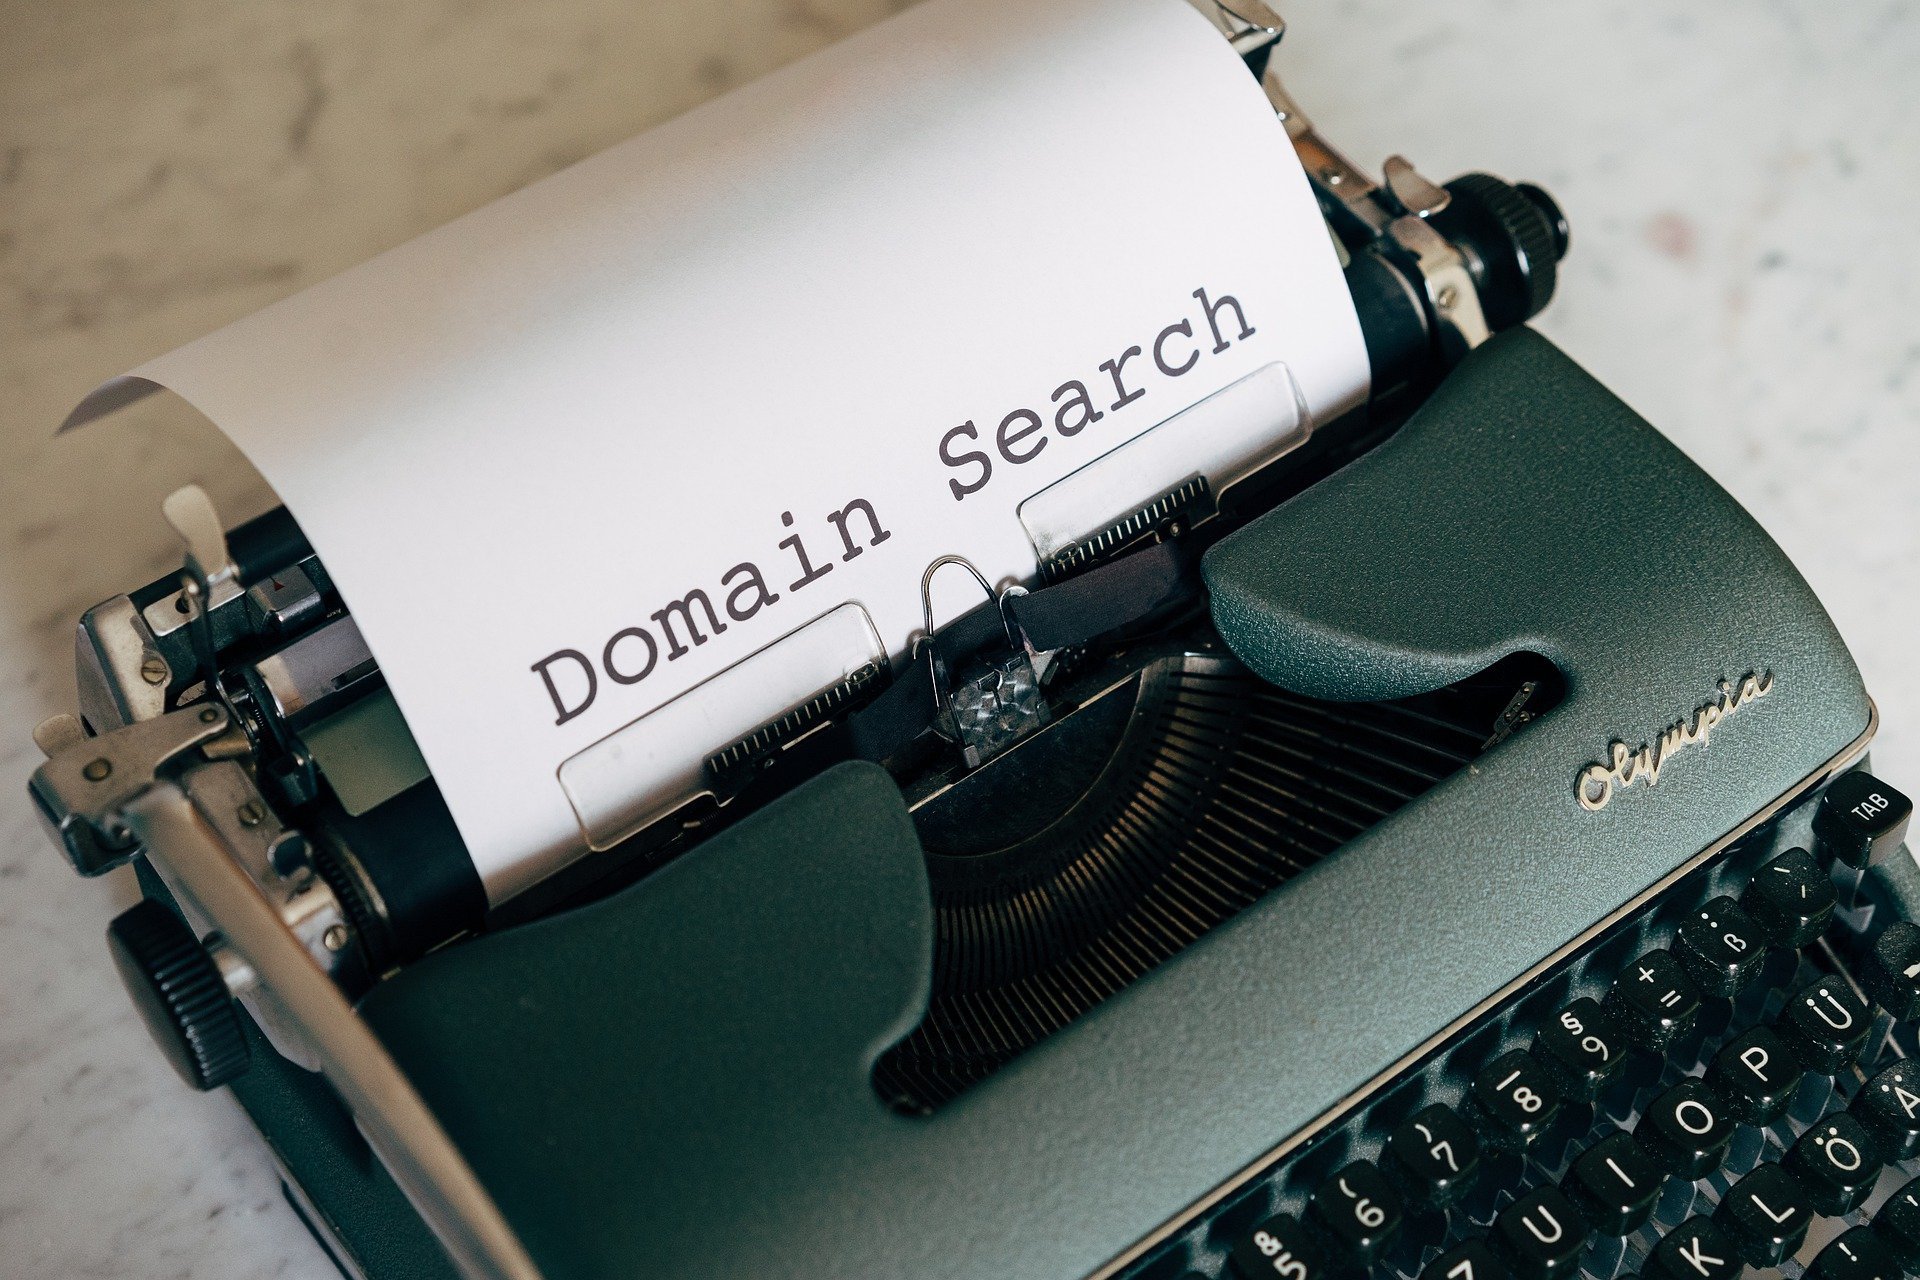 Domain Search